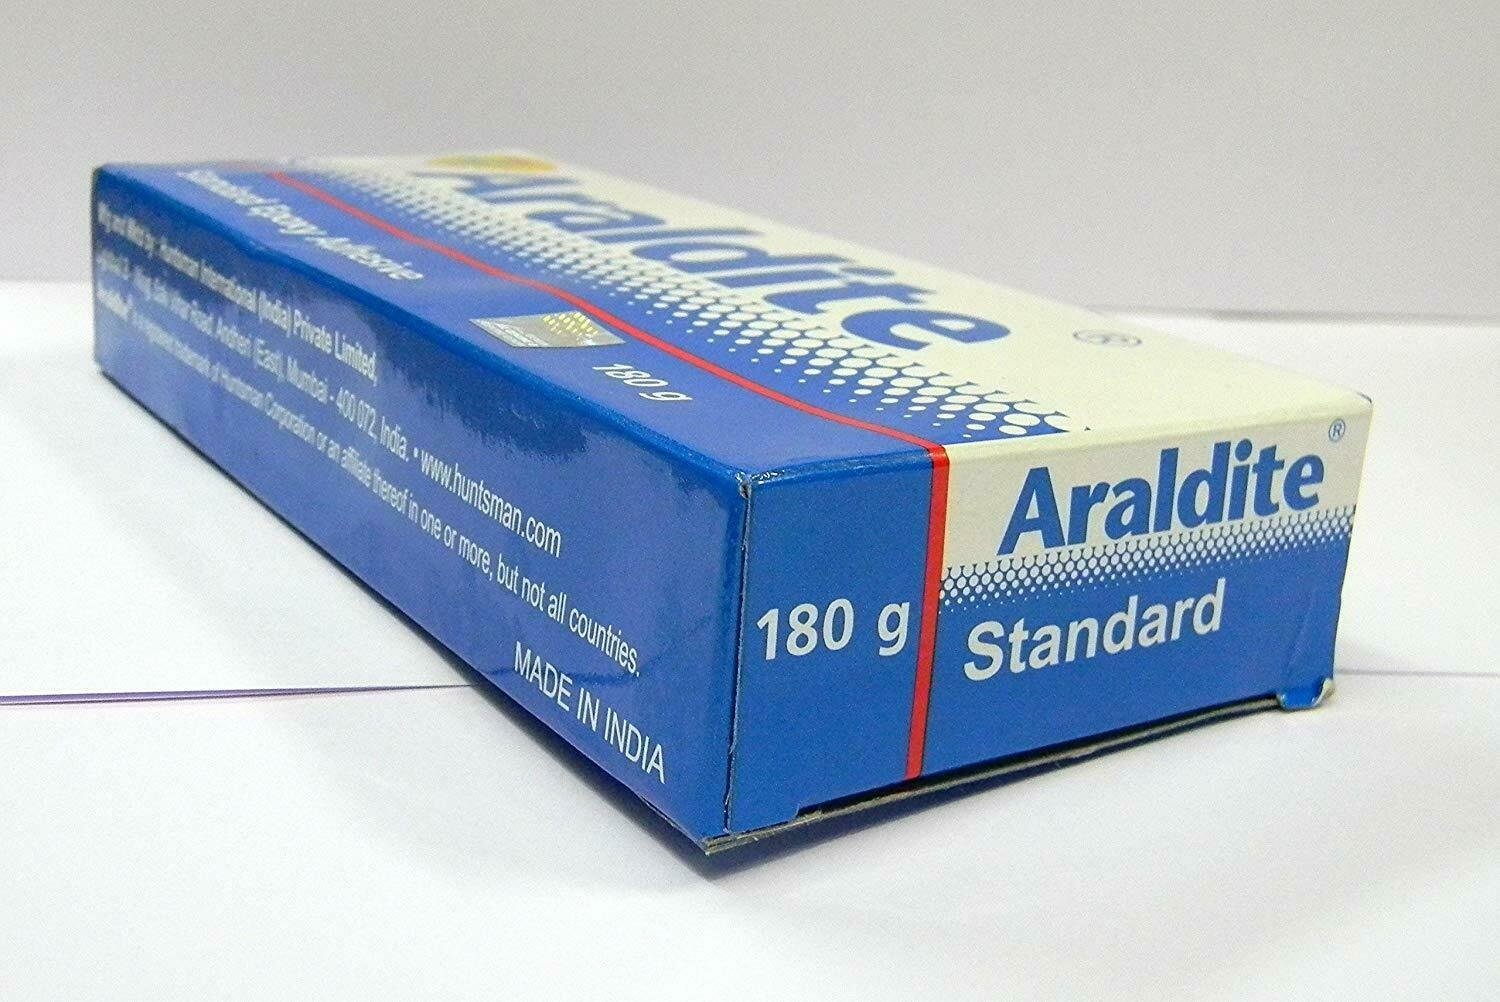 Araldite Standard Epoxy adhesive Glue 2 Part Resin & Hardener free postage  17ml X 2